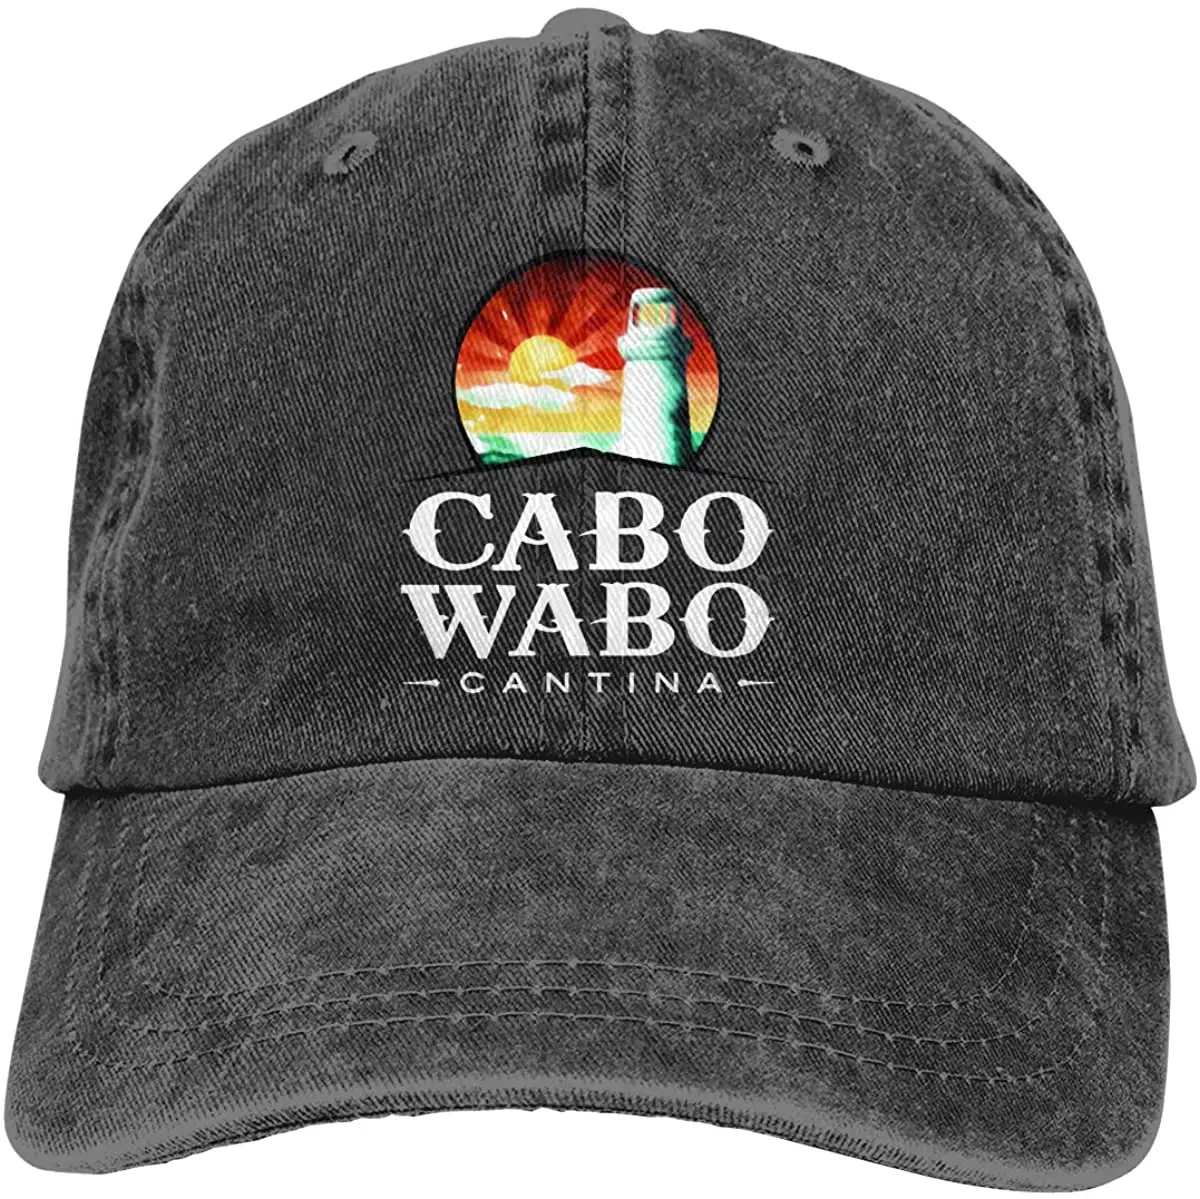 

MJtrghthavbu Cabo Wabo Adult Cool Cowboy Hat Adjustable Casquette Baseball Cap Black